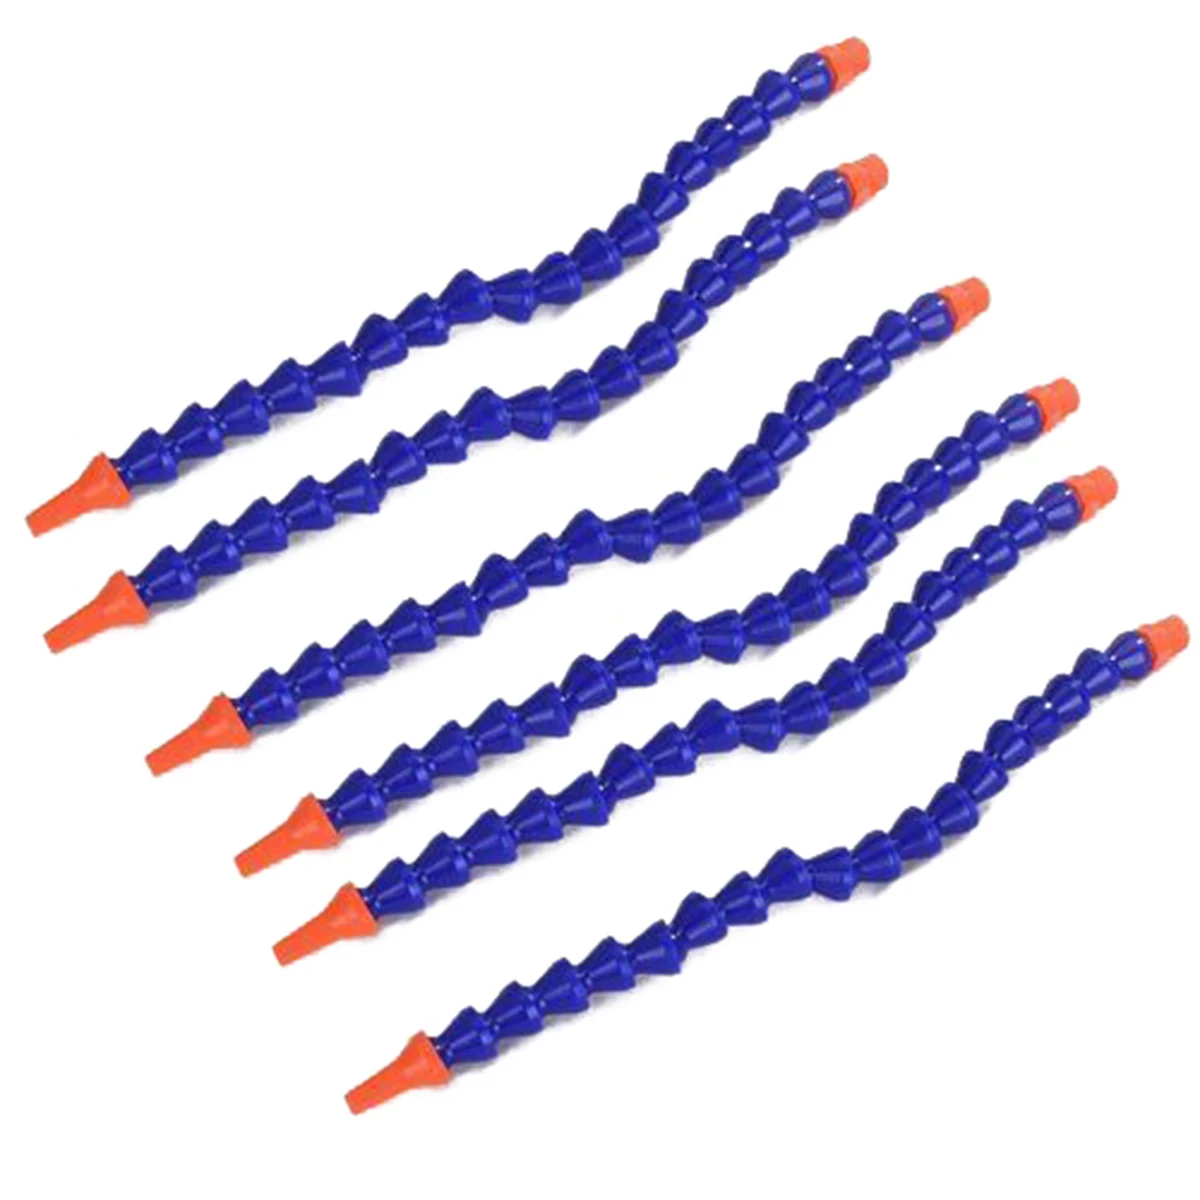 

6pcs/lot 1/4 Plastic Round Nozzle Flexible Water Oil Coolant Pipes Blue Orange Hoses 300mm for Lathe Milling CNC Machine Mayitr